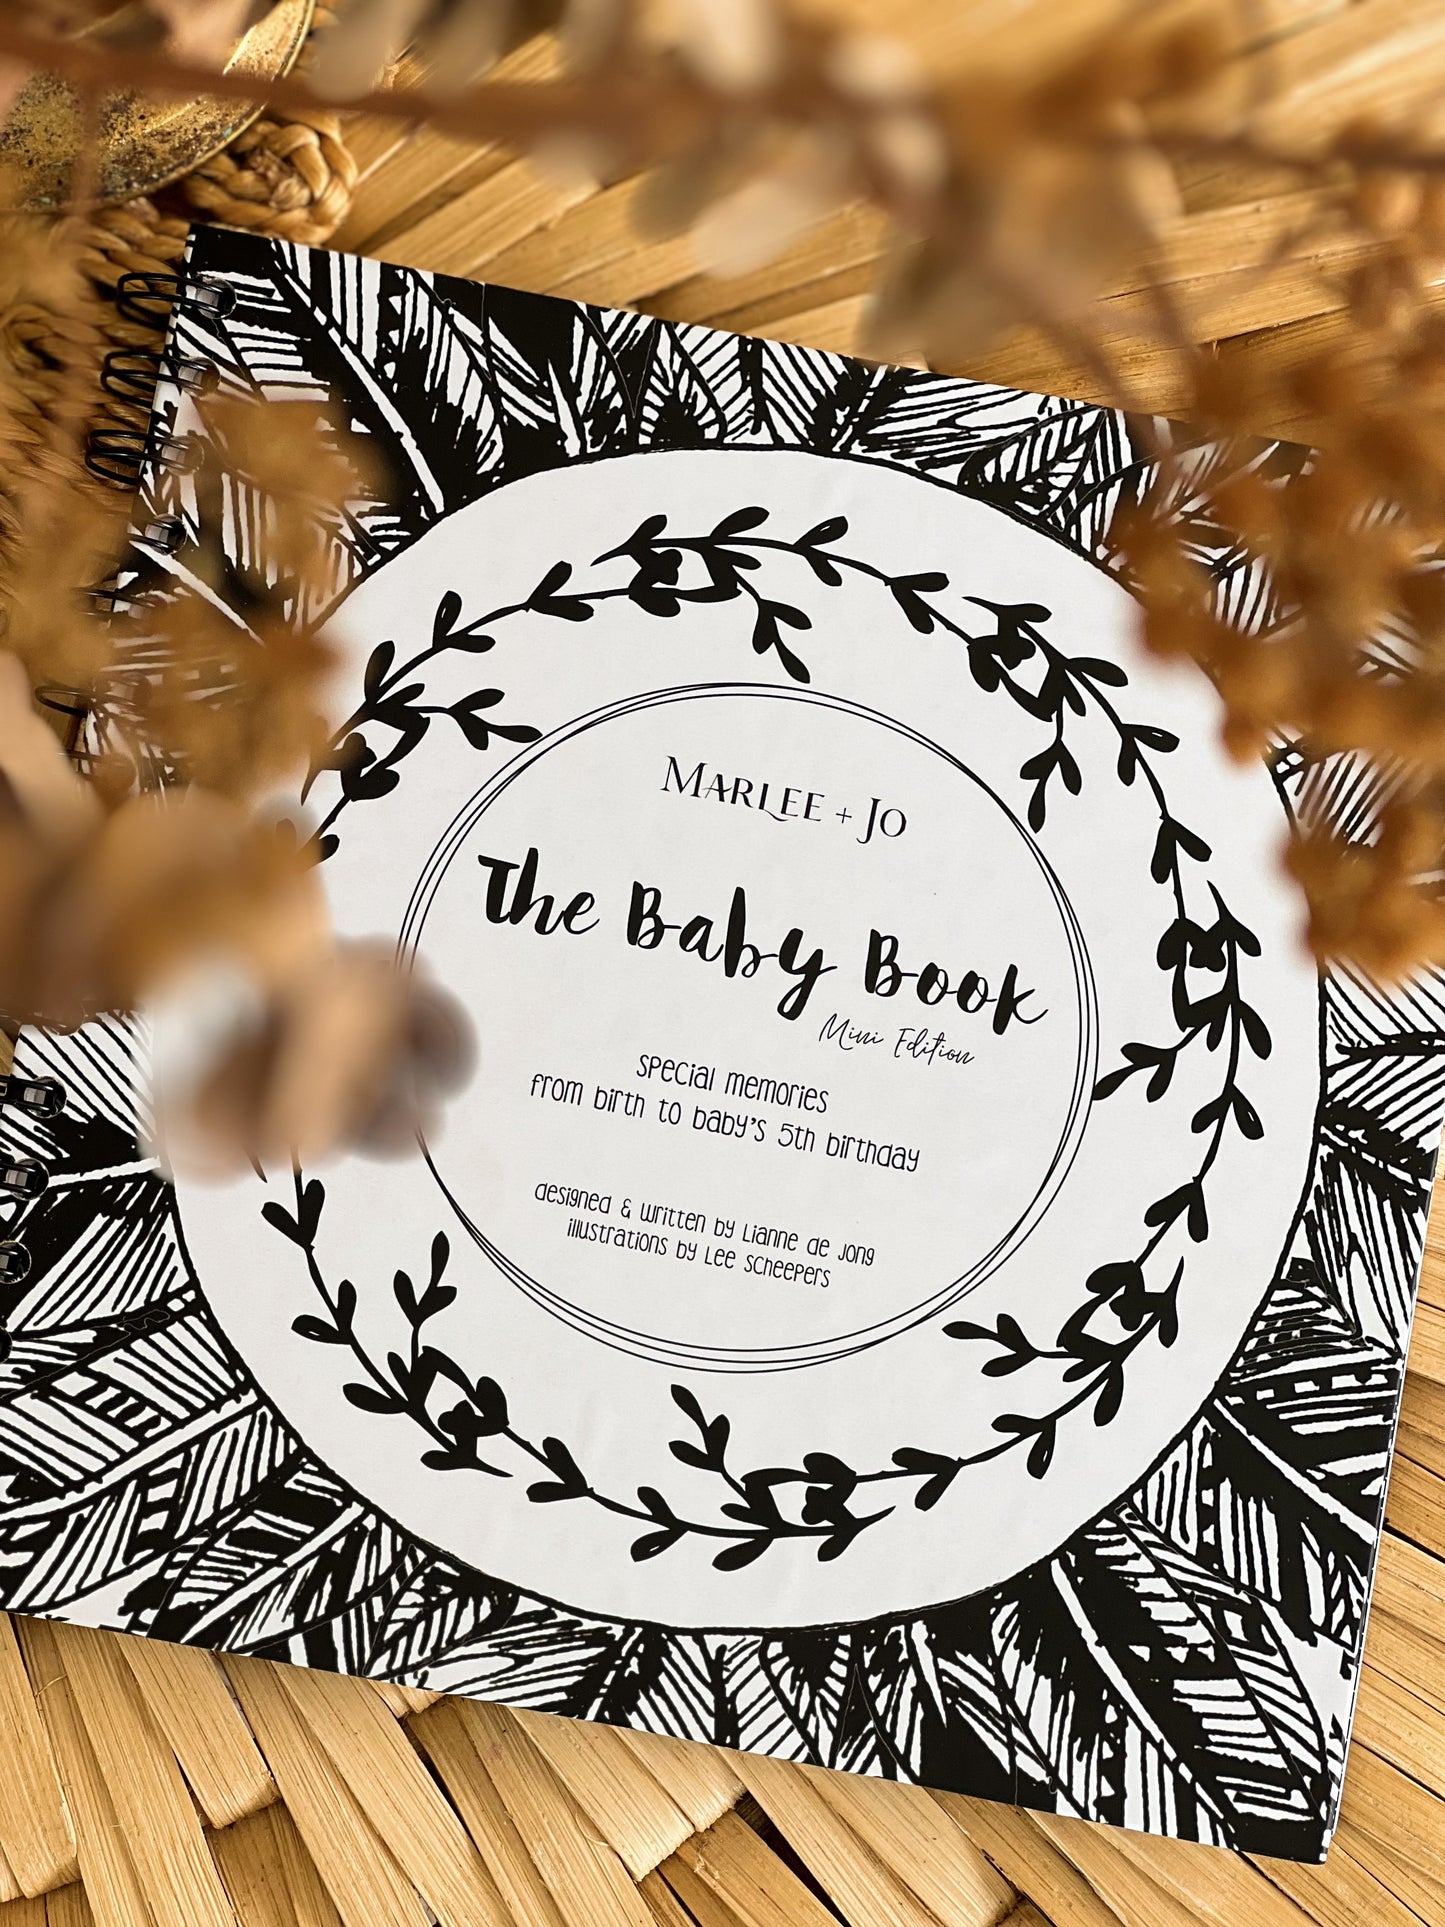 The Baby Book - Mini Edition